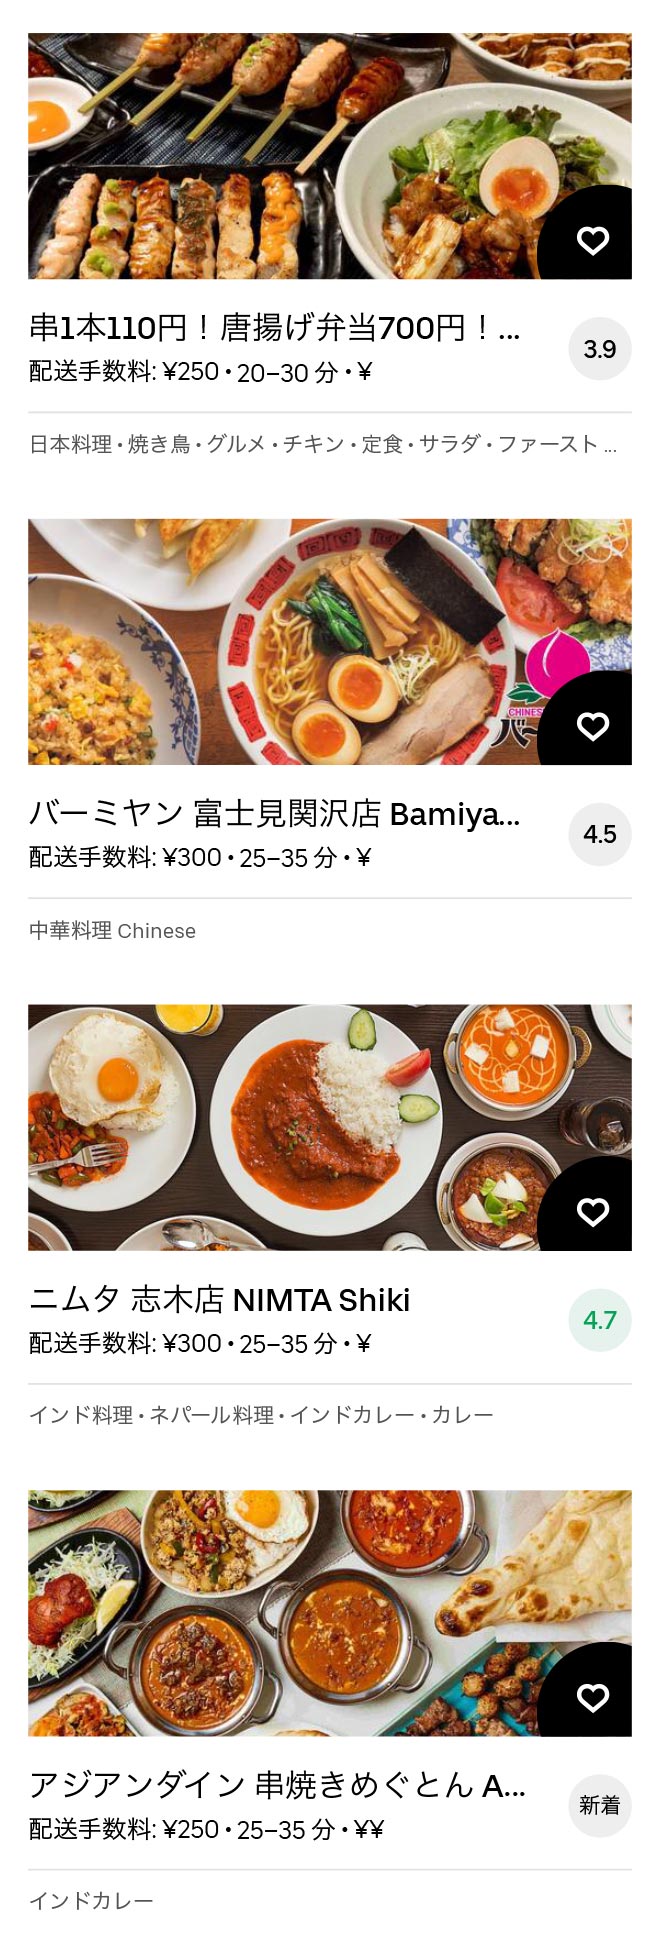 Yanasegawa menu 2011 09